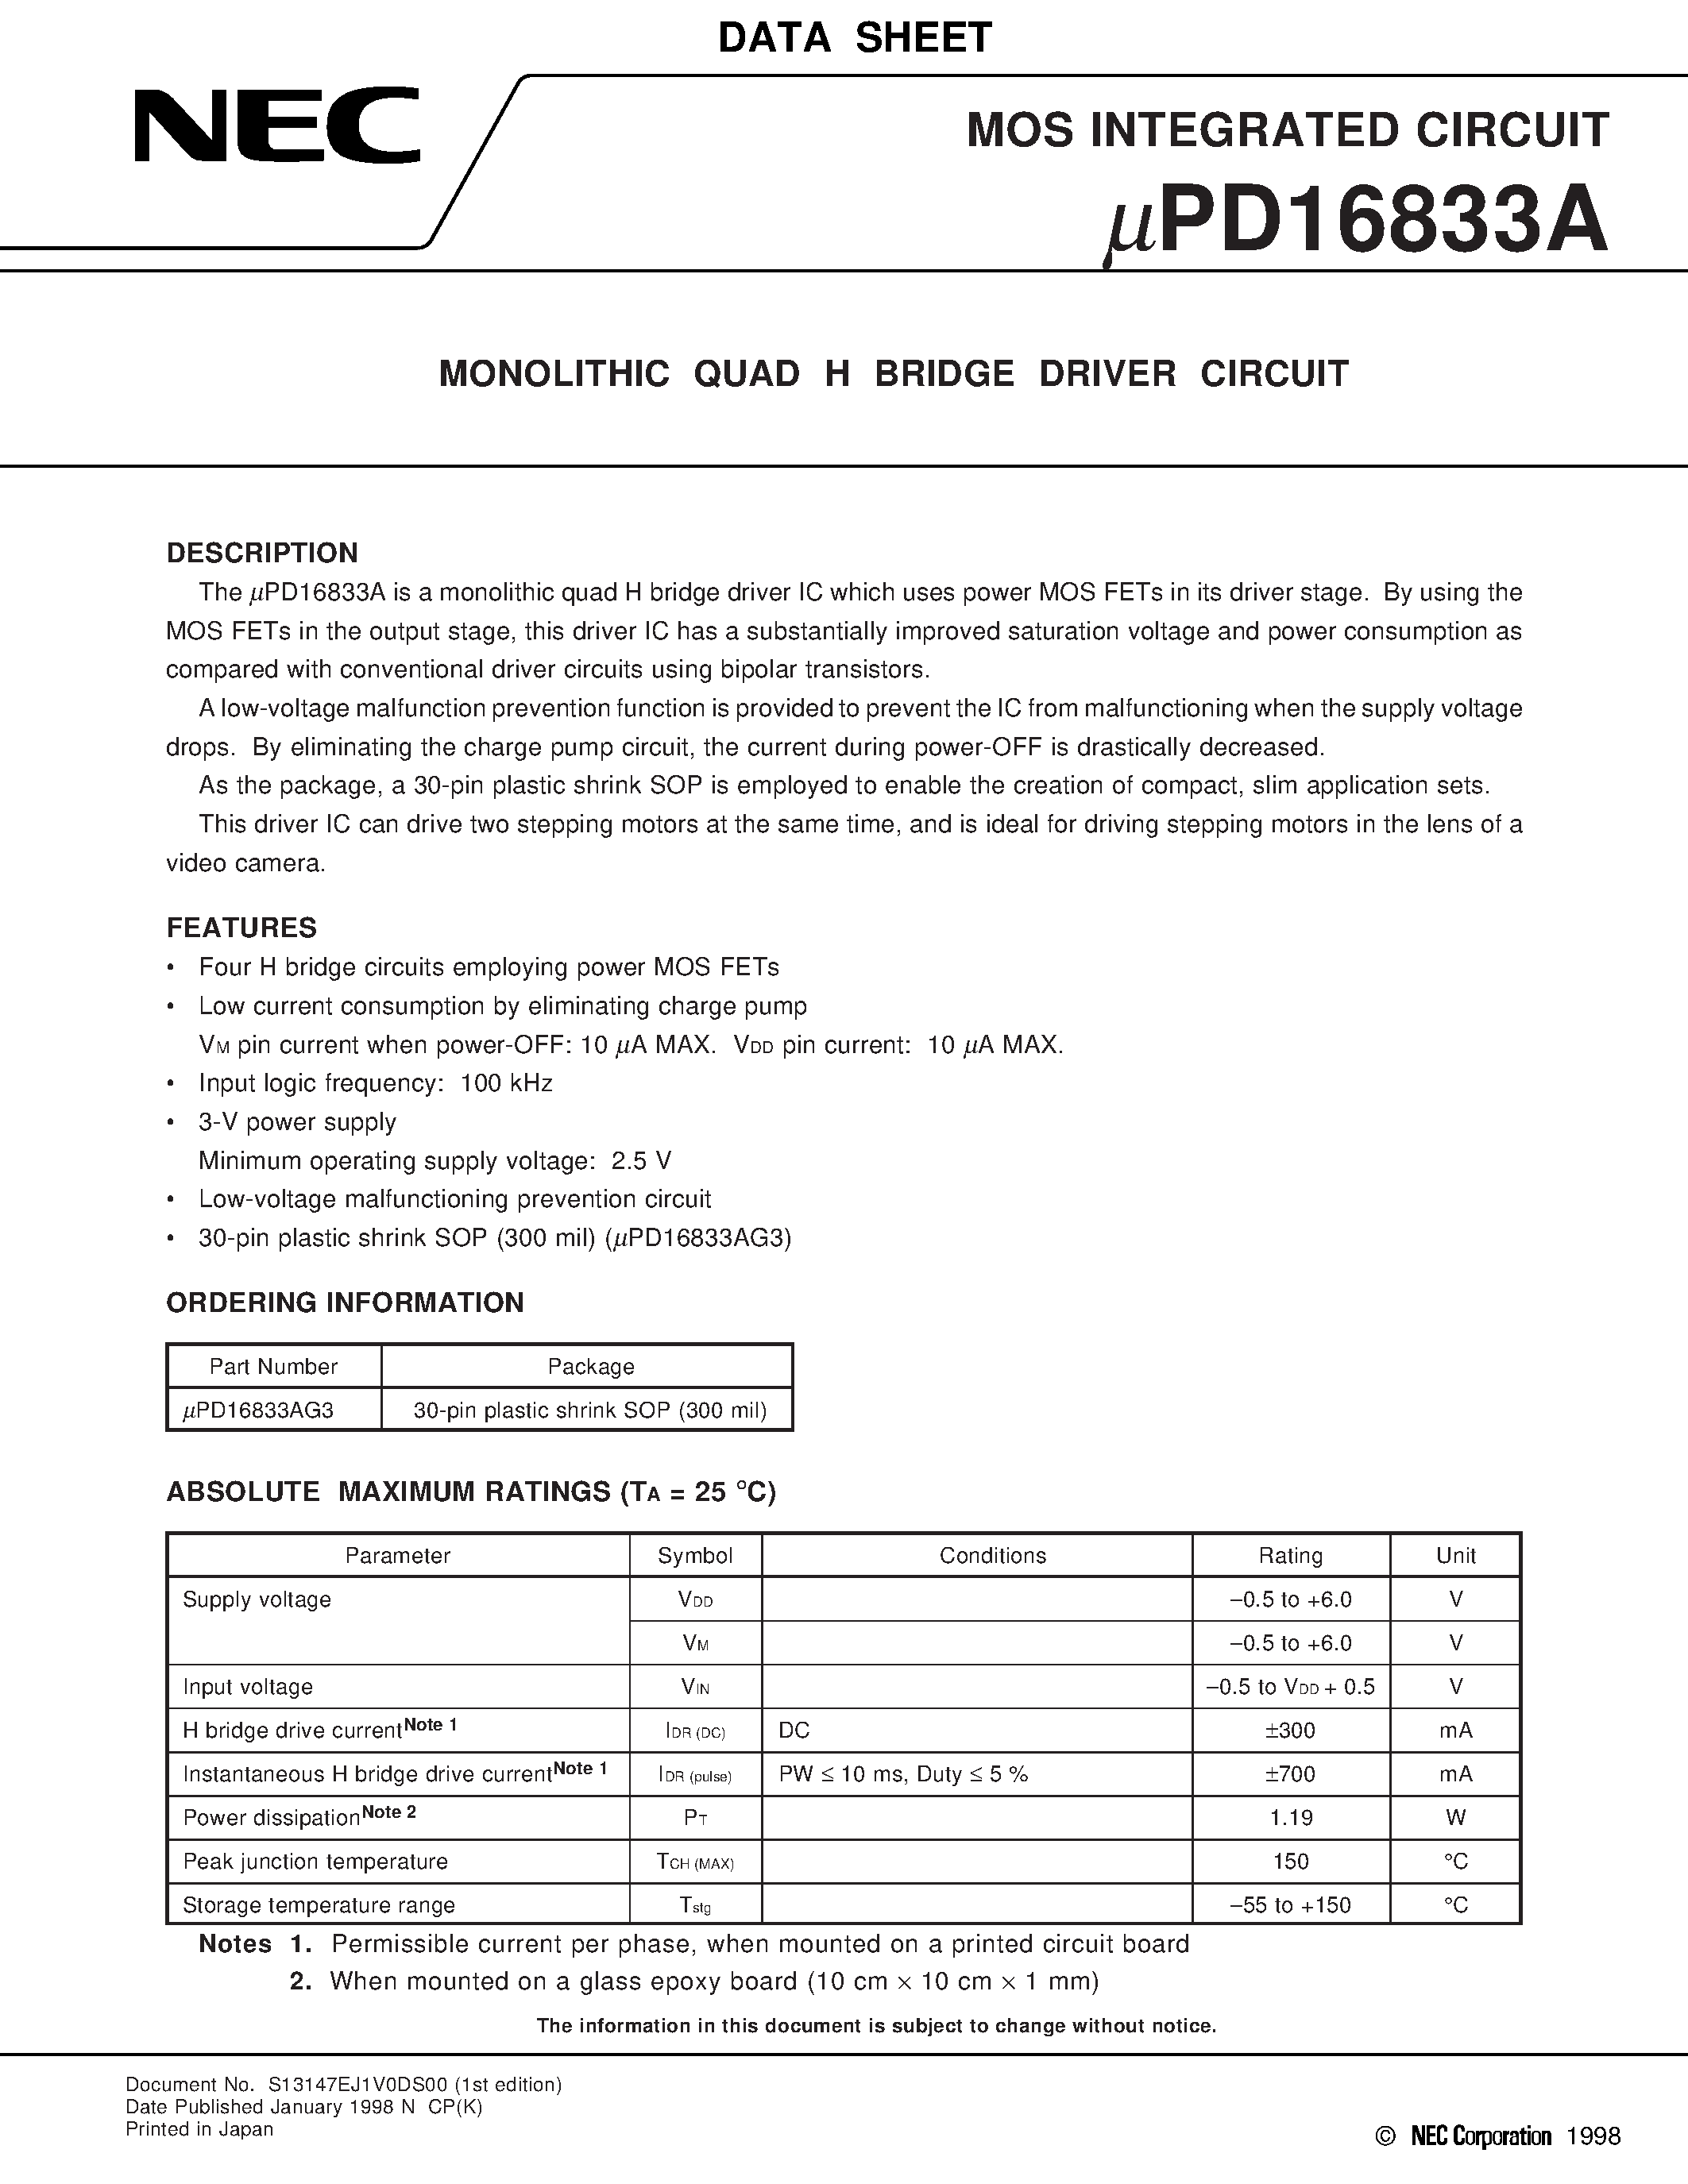 Даташит UPD16833A - MONOLITHIC QUAD H BRIDGE DRIVER CIRCUIT страница 1